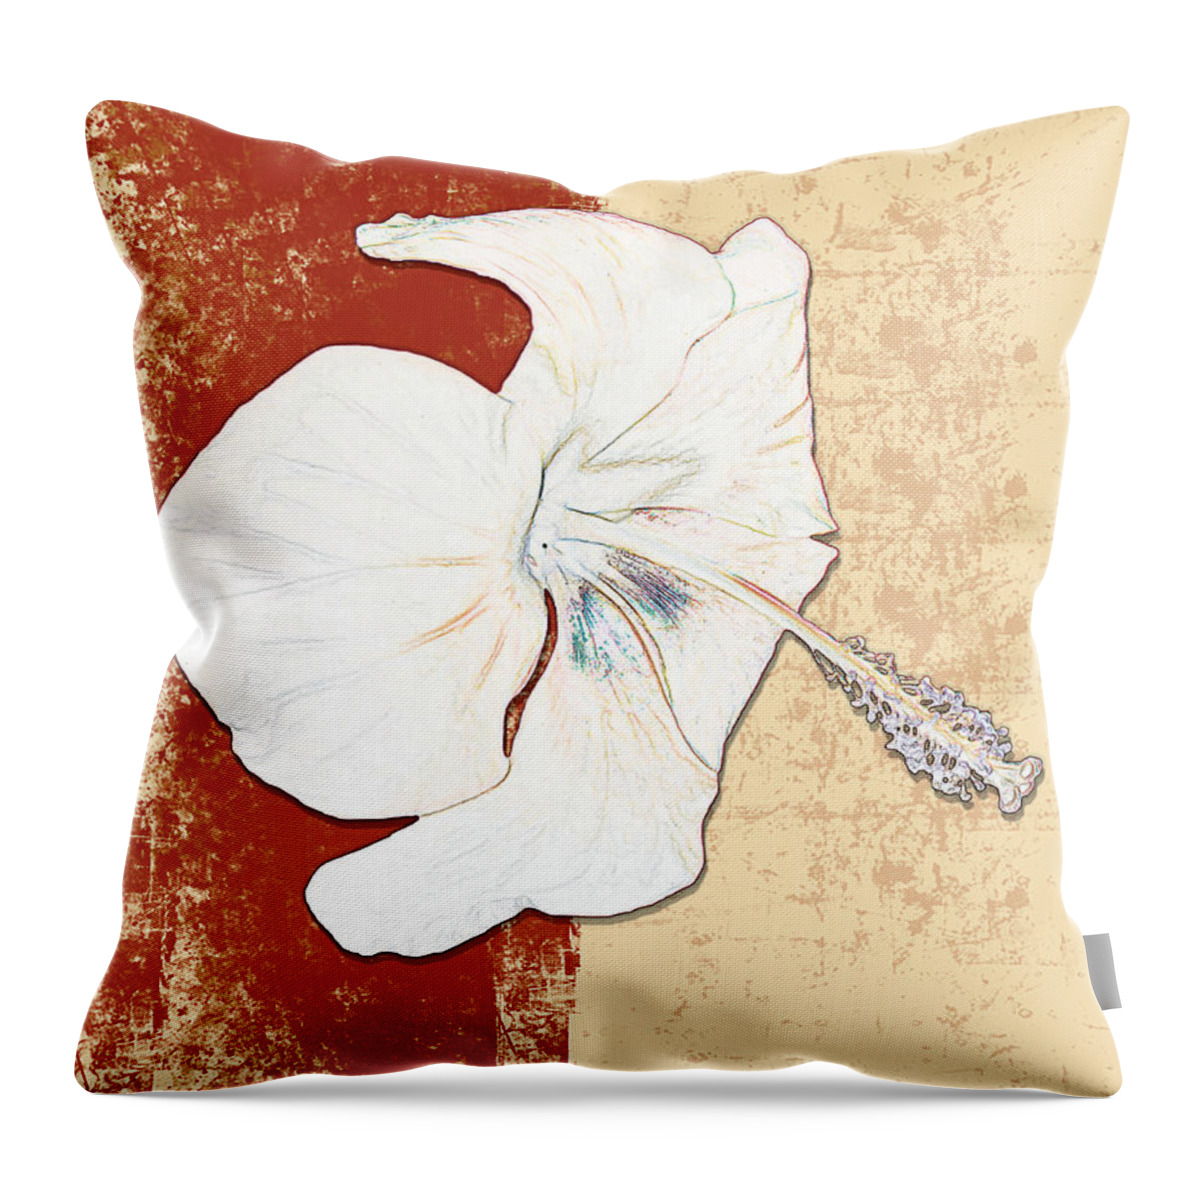 Beige Throw Pillow featuring the digital art White Flower by Milena Ilieva